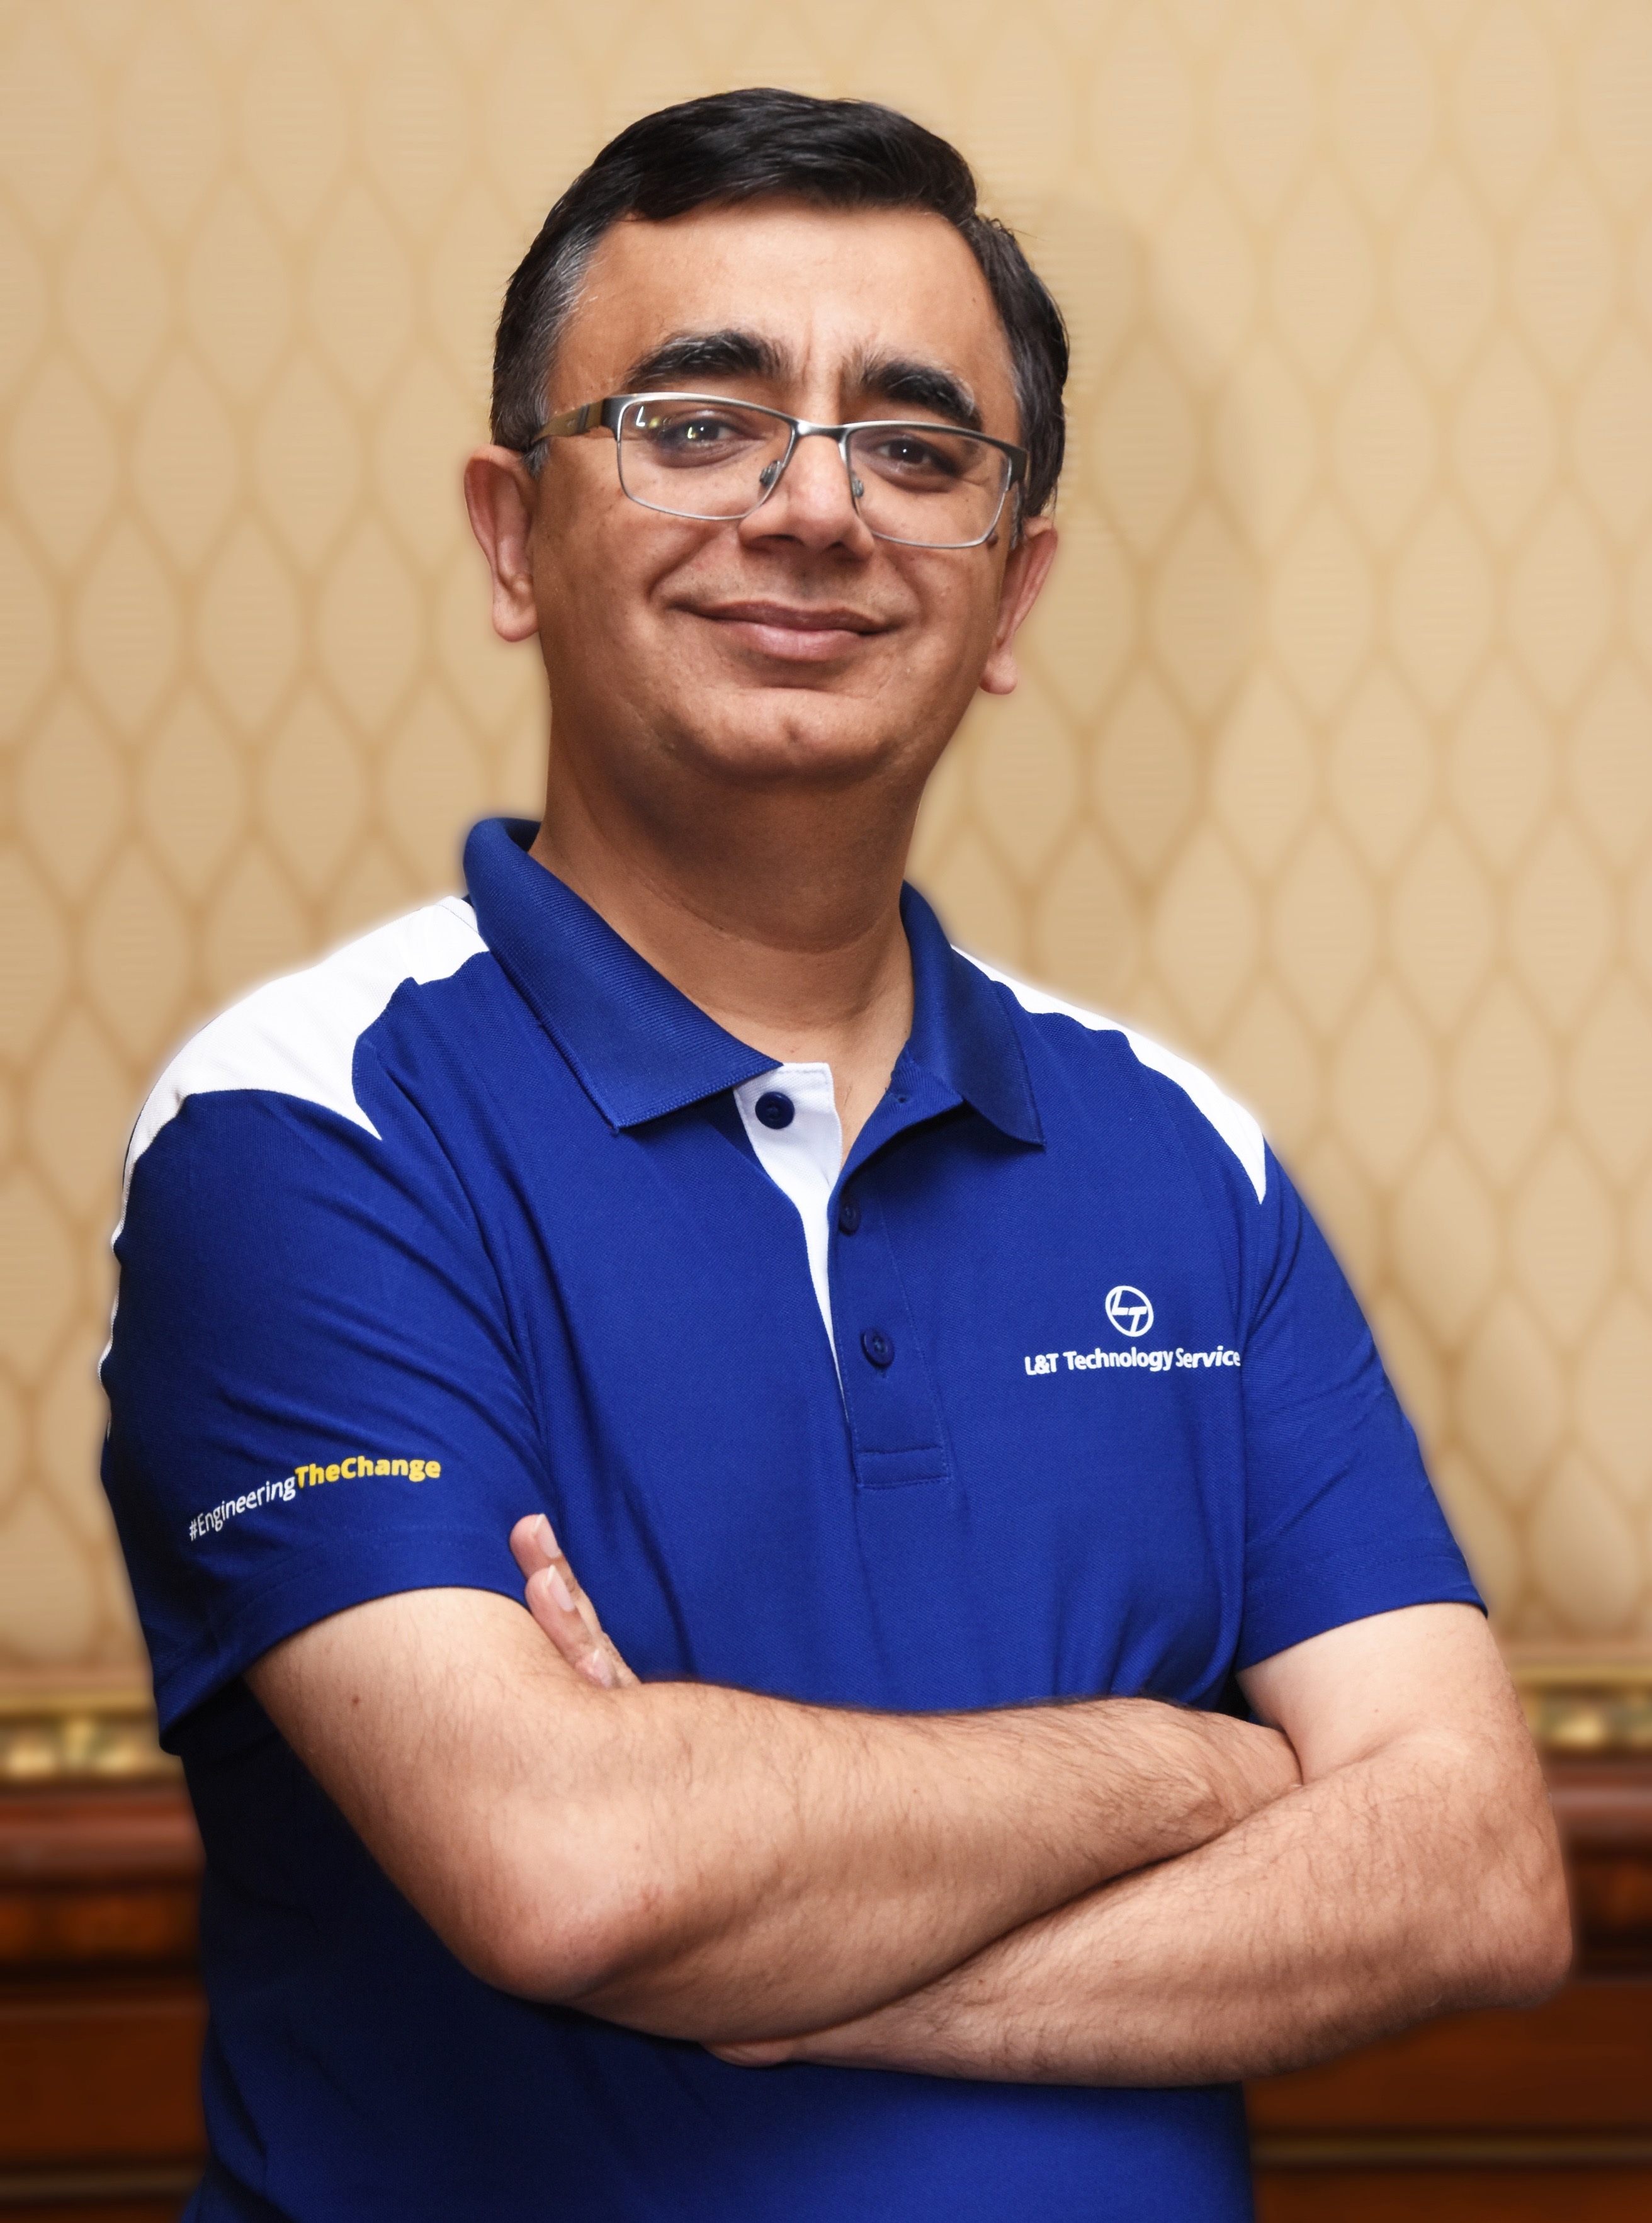 Samir Bagga, <span>CMO <br> L&T Technology Services</span>